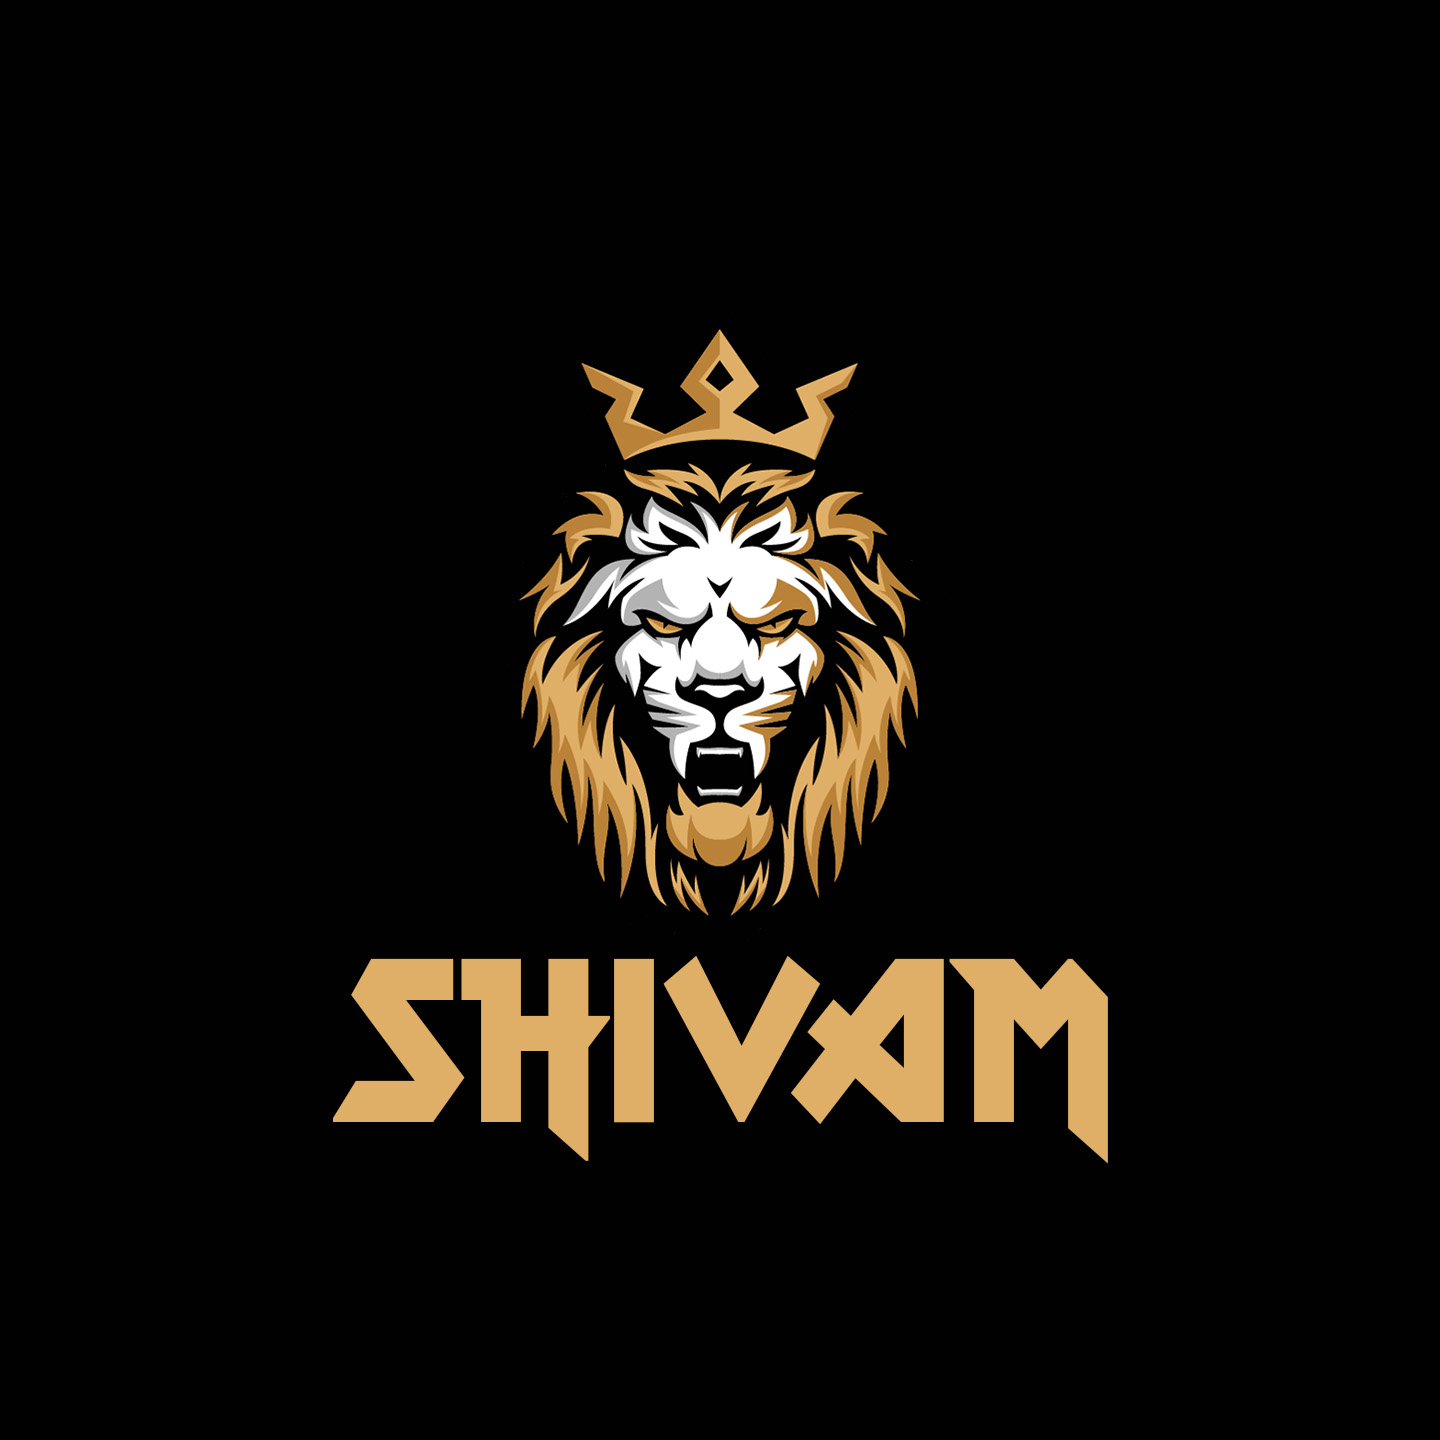 Shivam Brand Name Logo Design Creative Name Logo Design || Company logo  design - YouTube